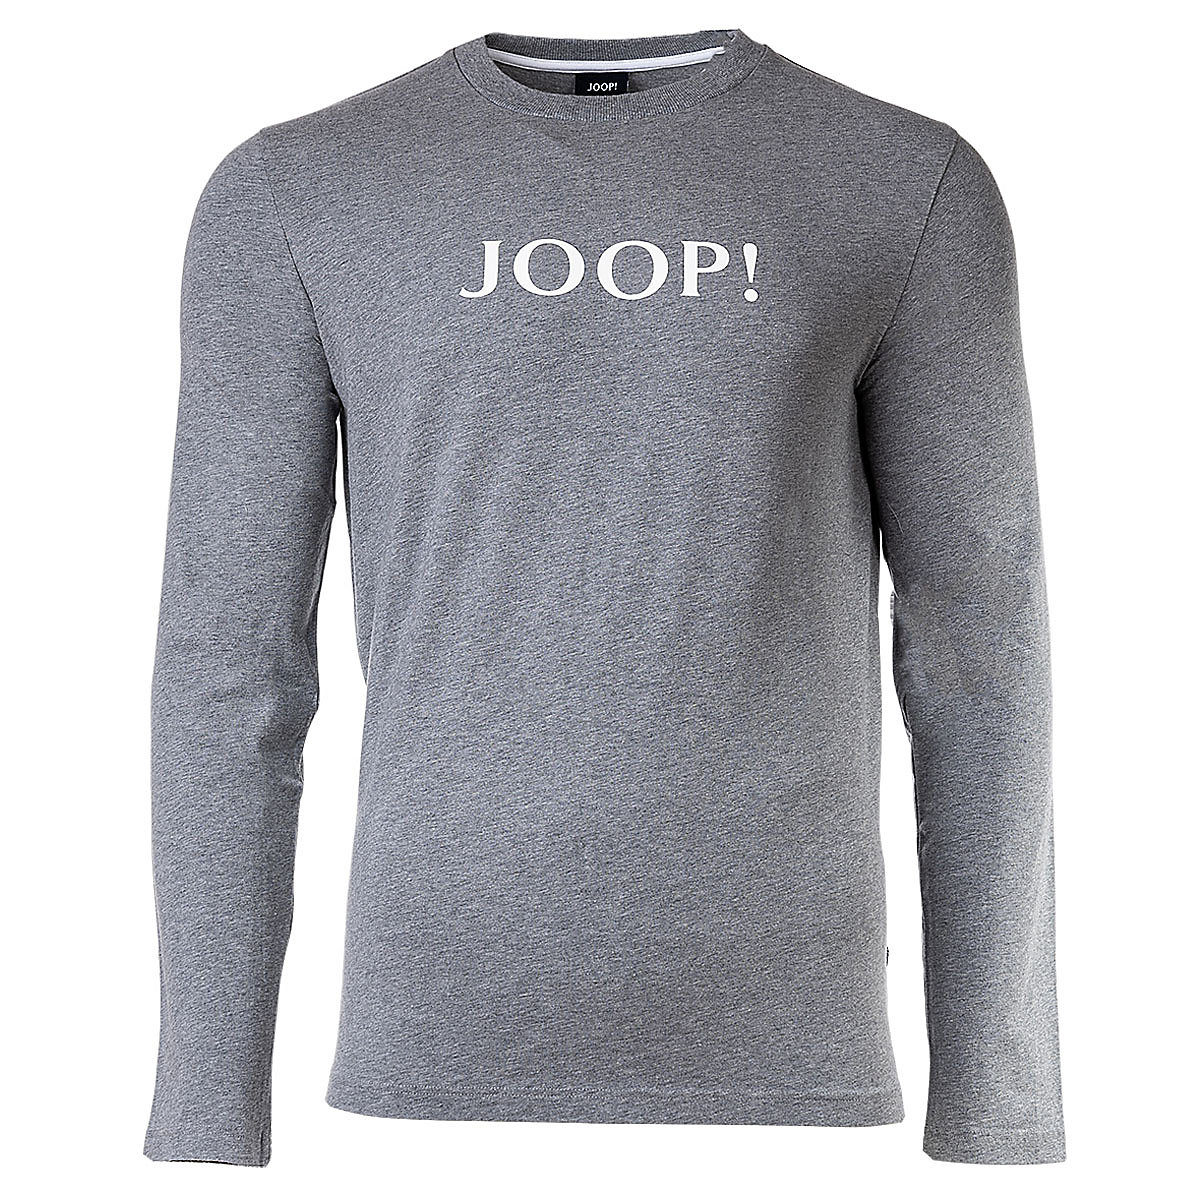 JOOP! Herren Langarm-Shirt Loungewear Rundhals Longsleeve Cotton Stretch T-Shirts grau